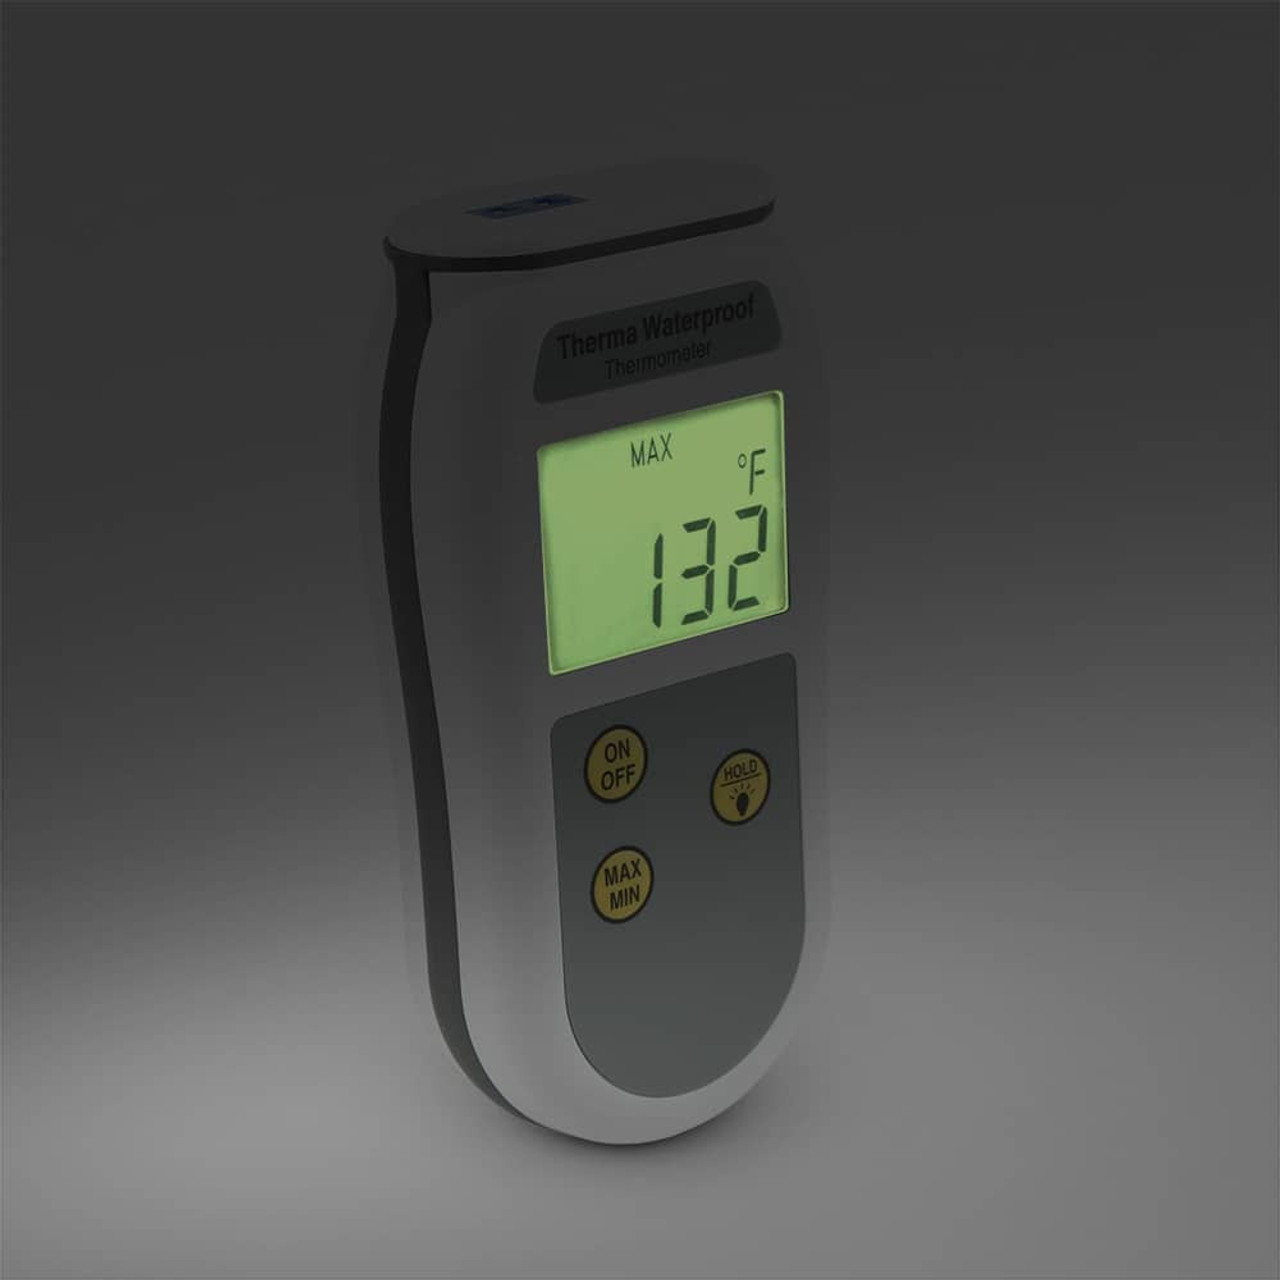 T-Grip™ Heavy Duty Waterproof Thermometer